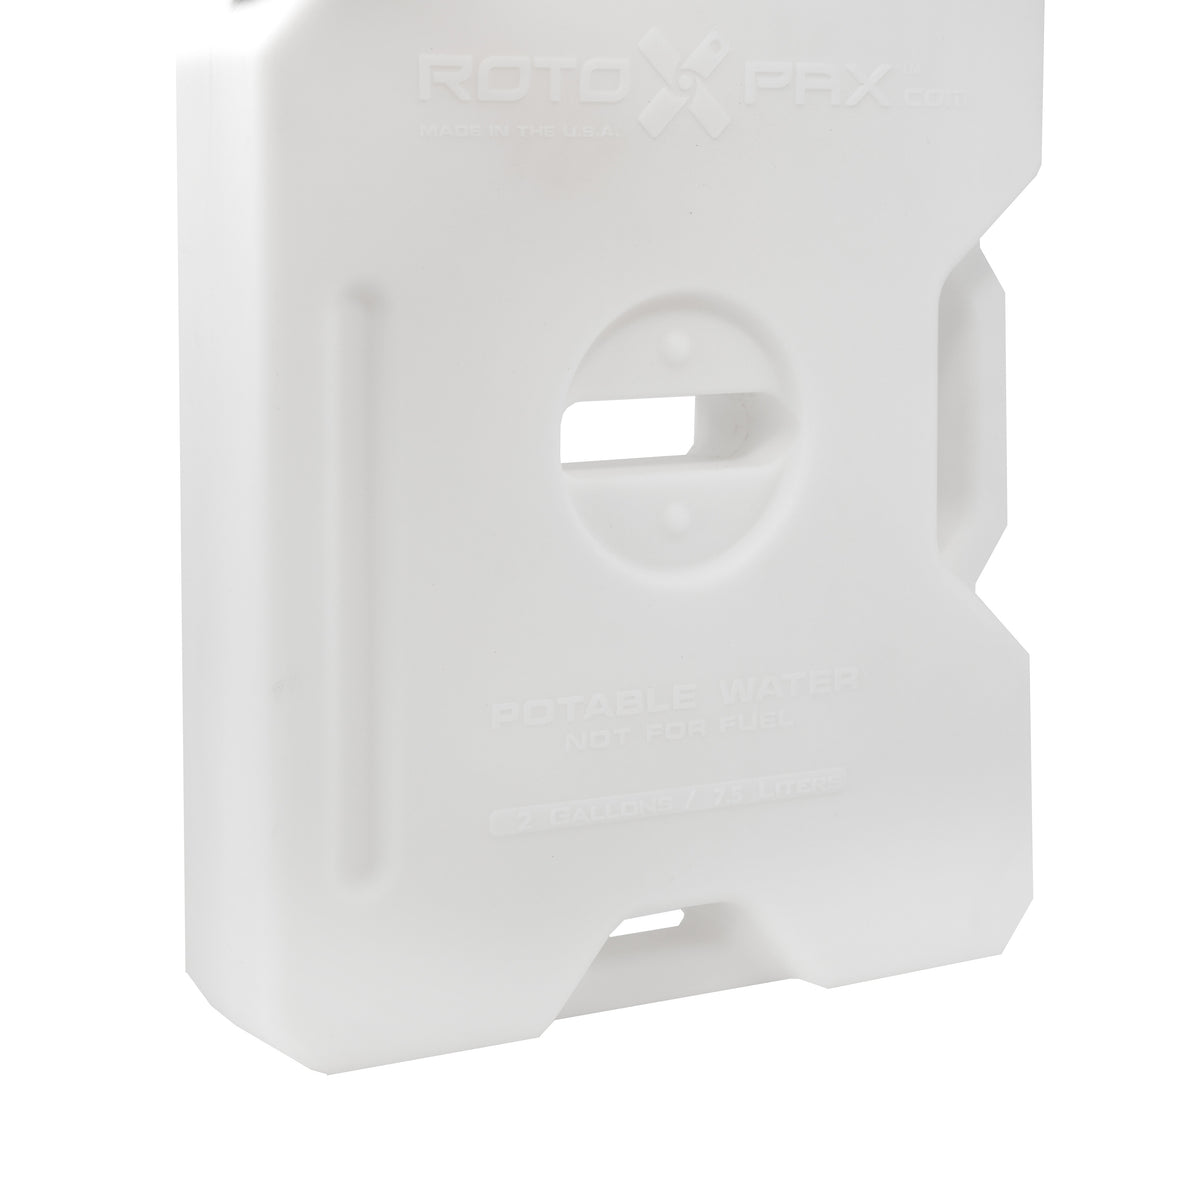 Roto Pax 2 Gallon Storage Pack, RX-2S